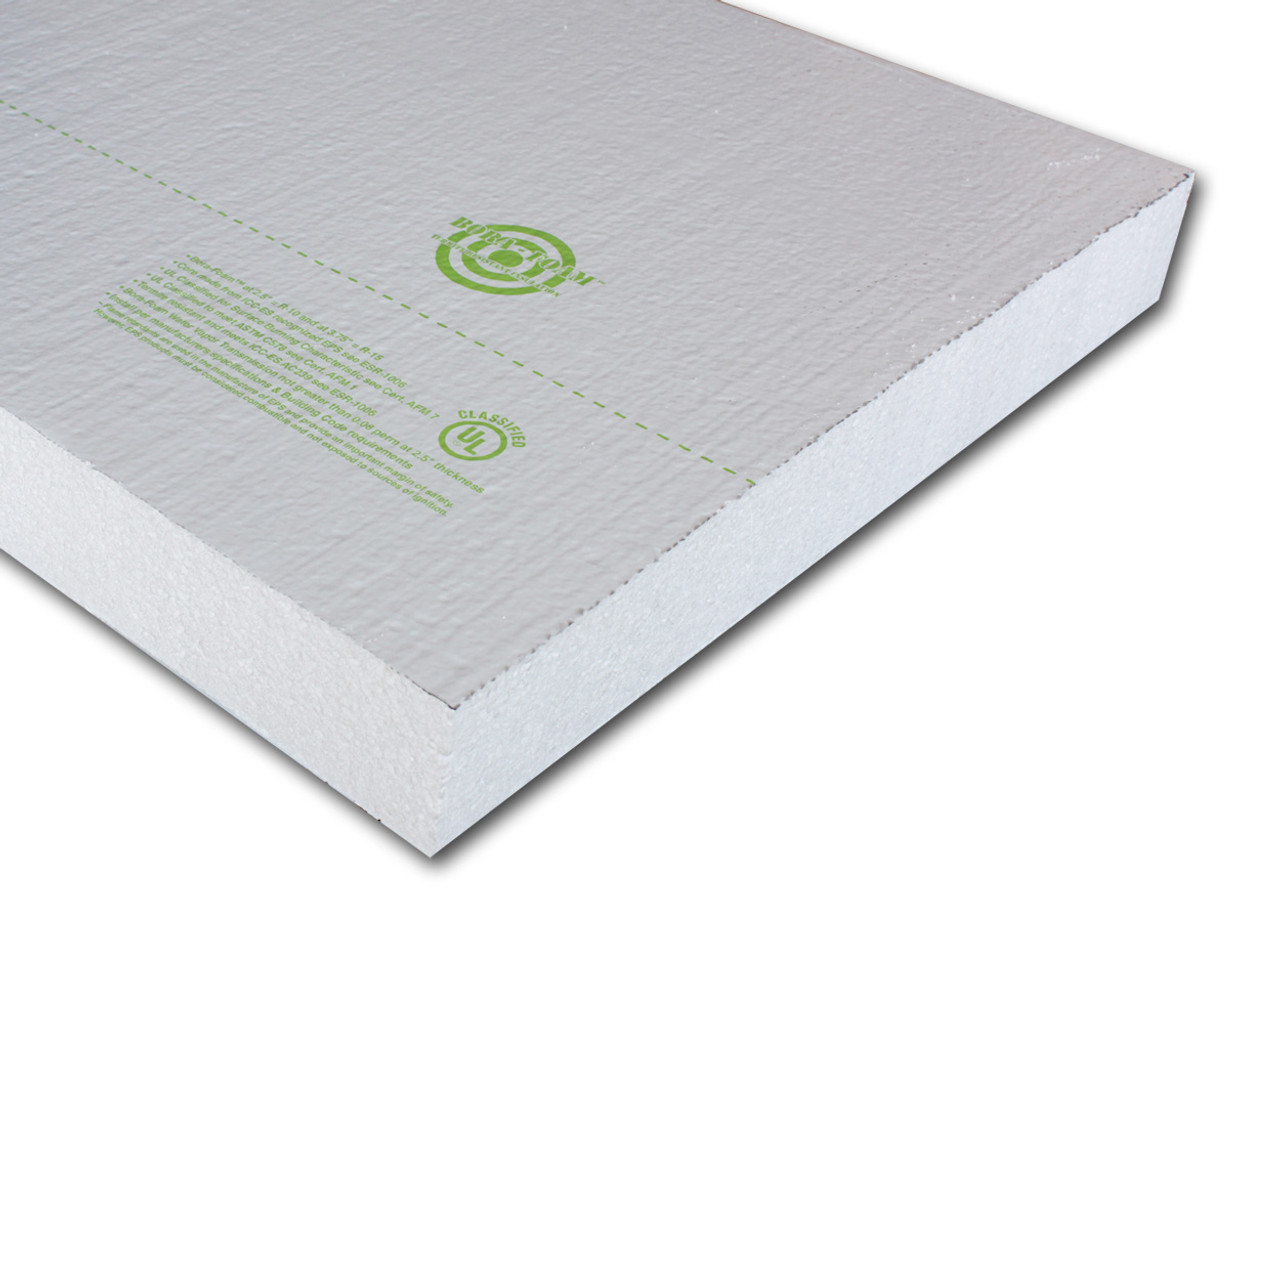 2 Inch Dow Styrofoam Board: Polystyrene Insulation Board